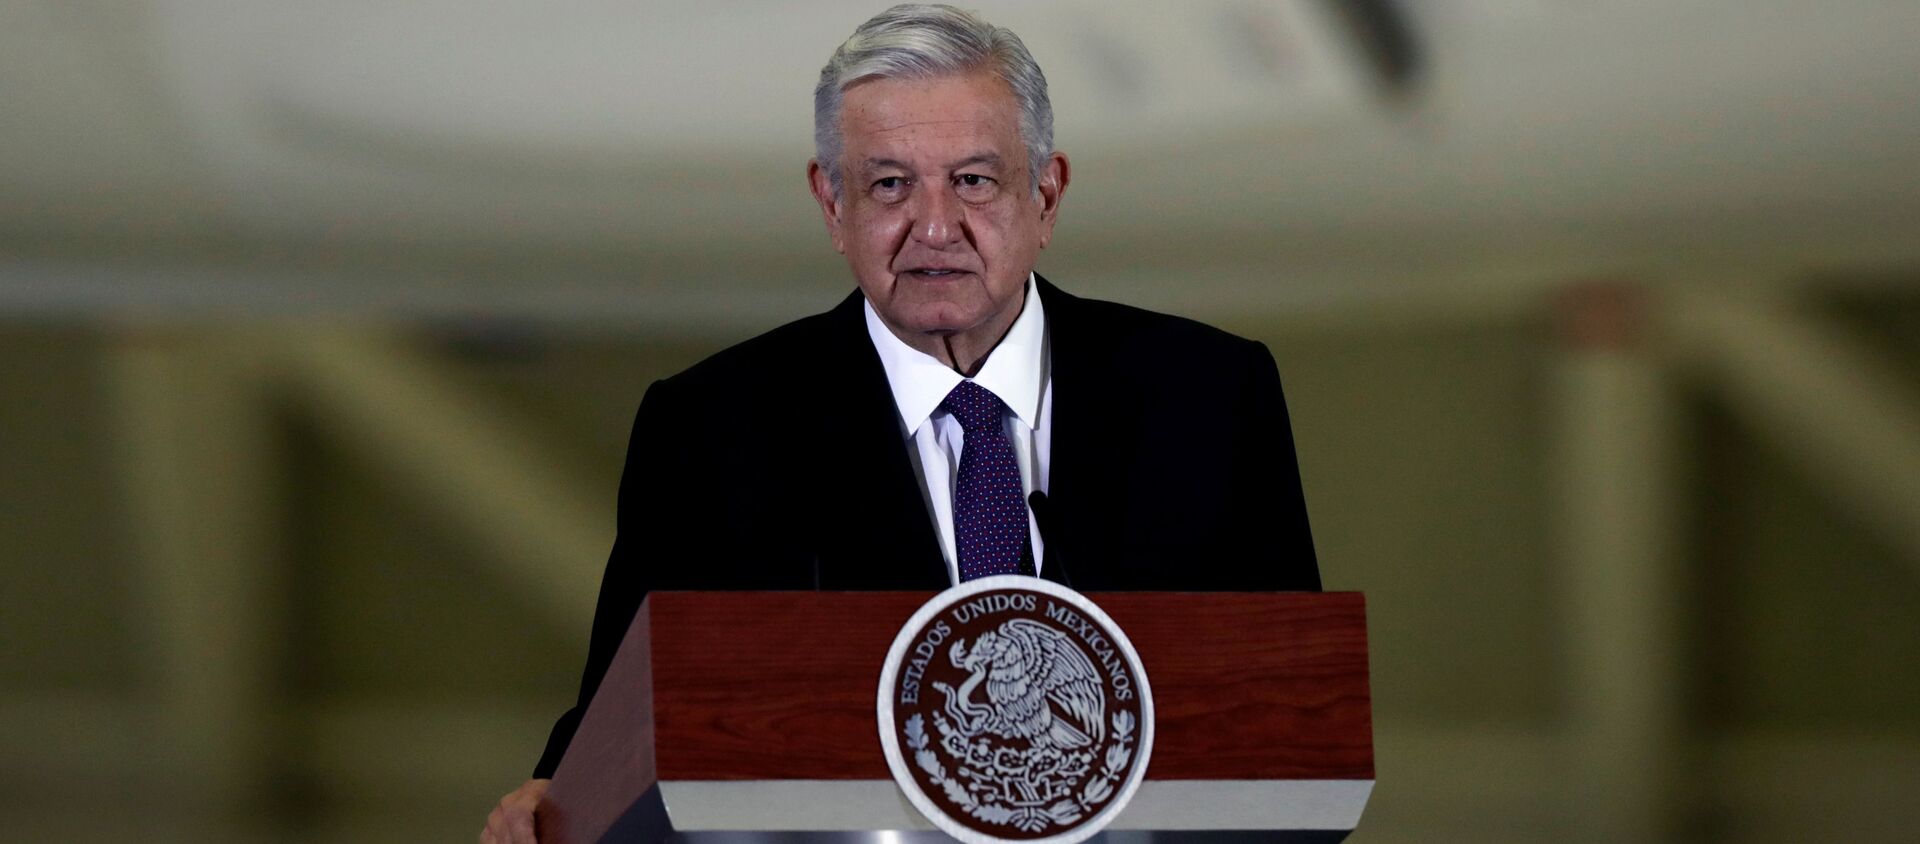 Andrés Manuel López Obrador, presidente mexicano - Sputnik Mundo, 1920, 20.08.2020